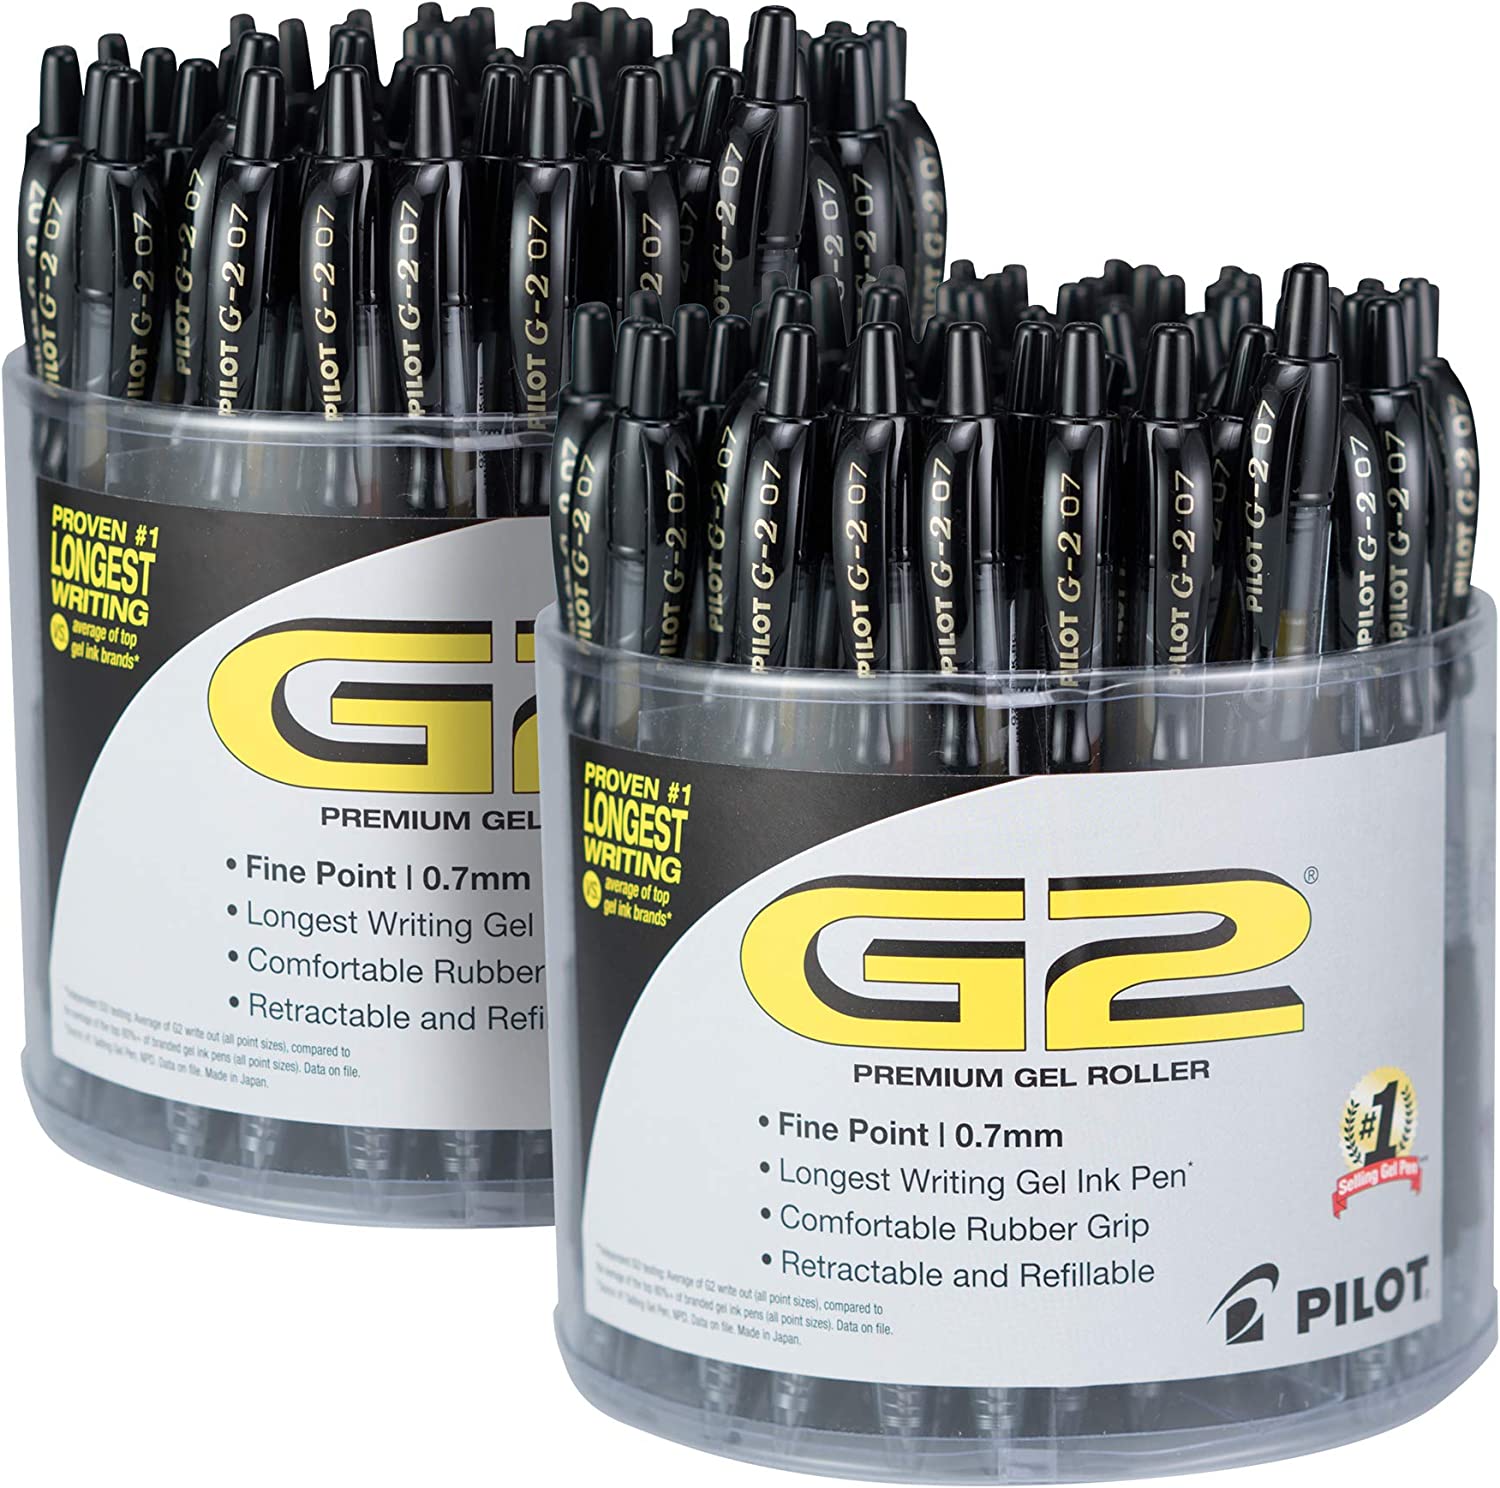 PILOT G2 Premium Refillable and Retractable Rolling Ball Gel Pens